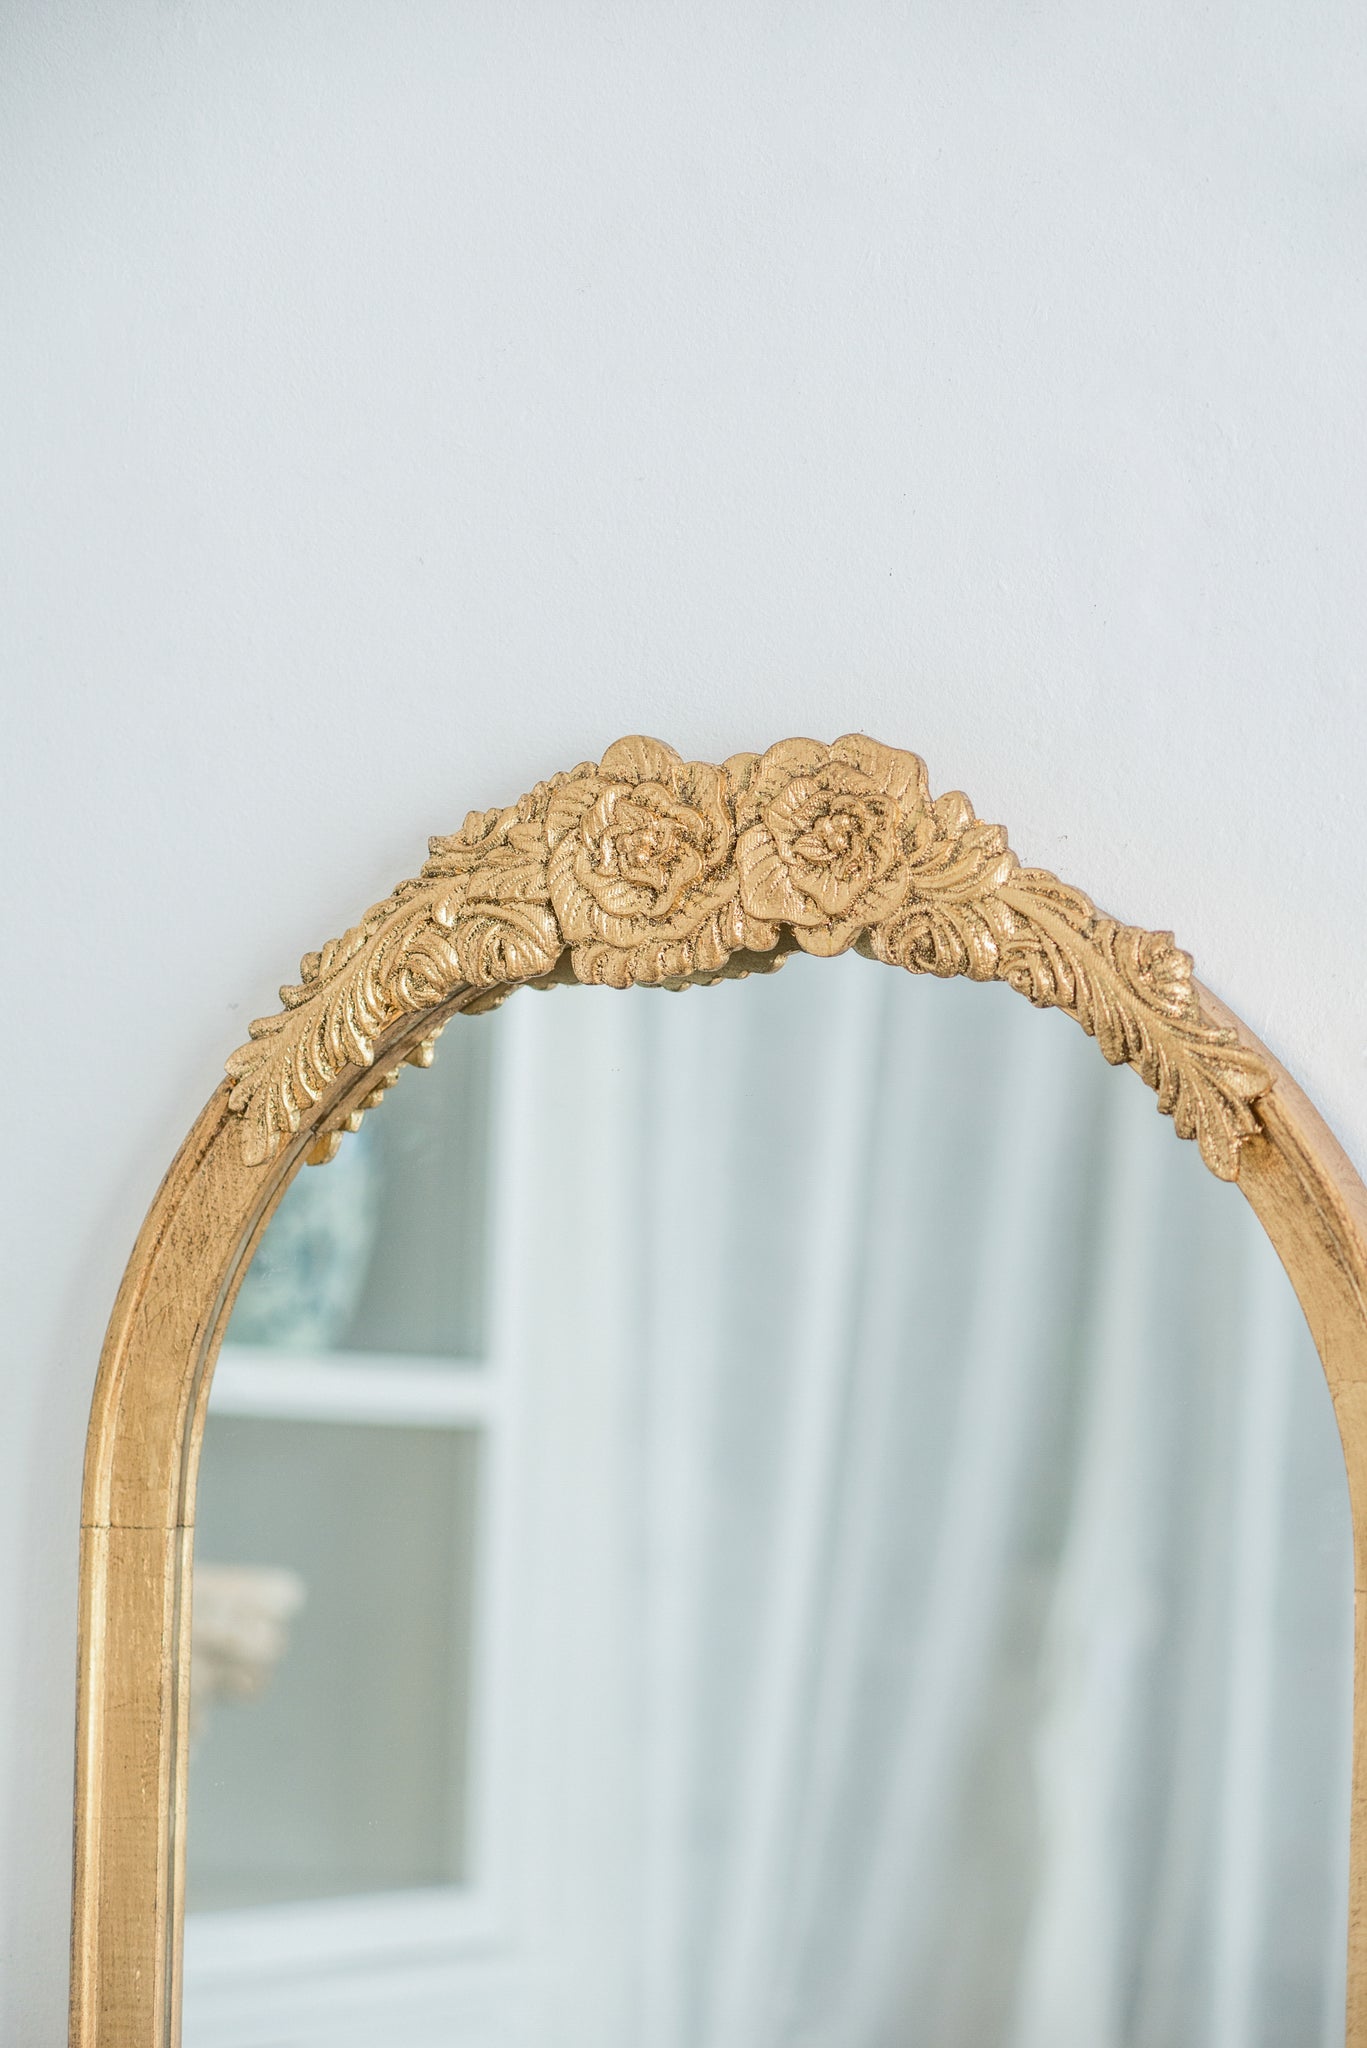 19"x56" Wood Floor Mirror, Full Body Mirror Dressing gold-wood+glass